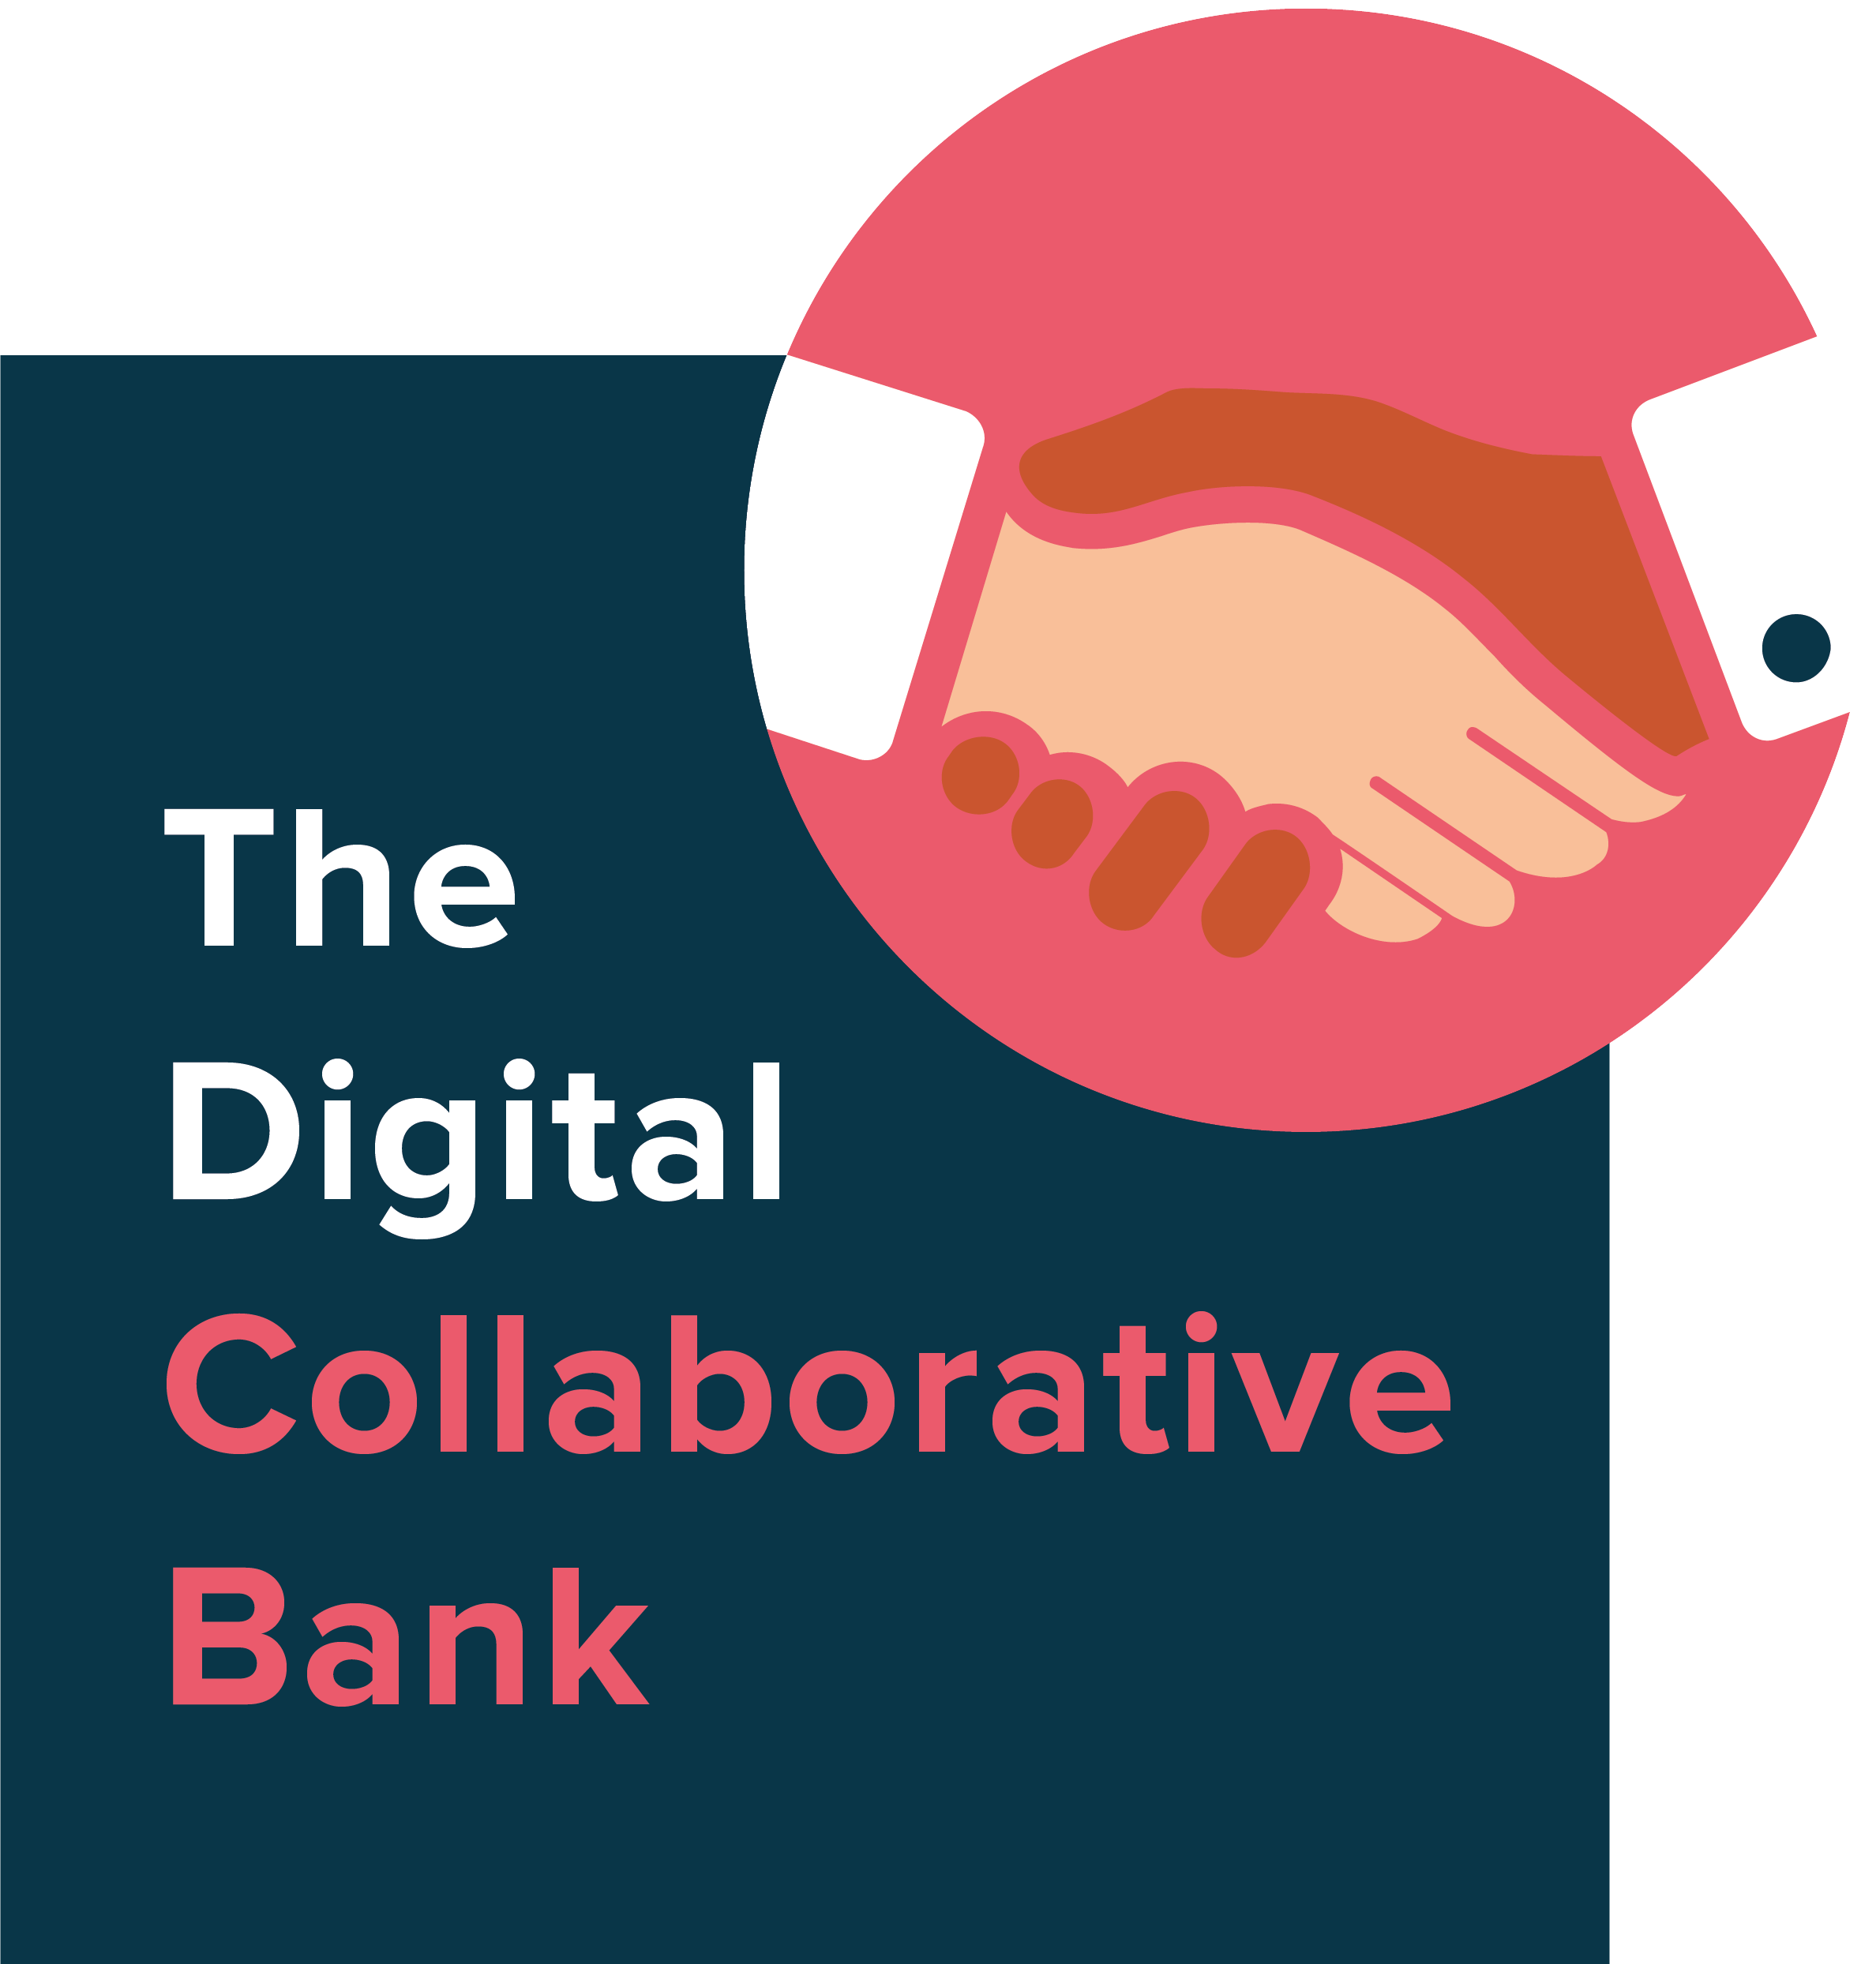 The Digital Collaborative Bank